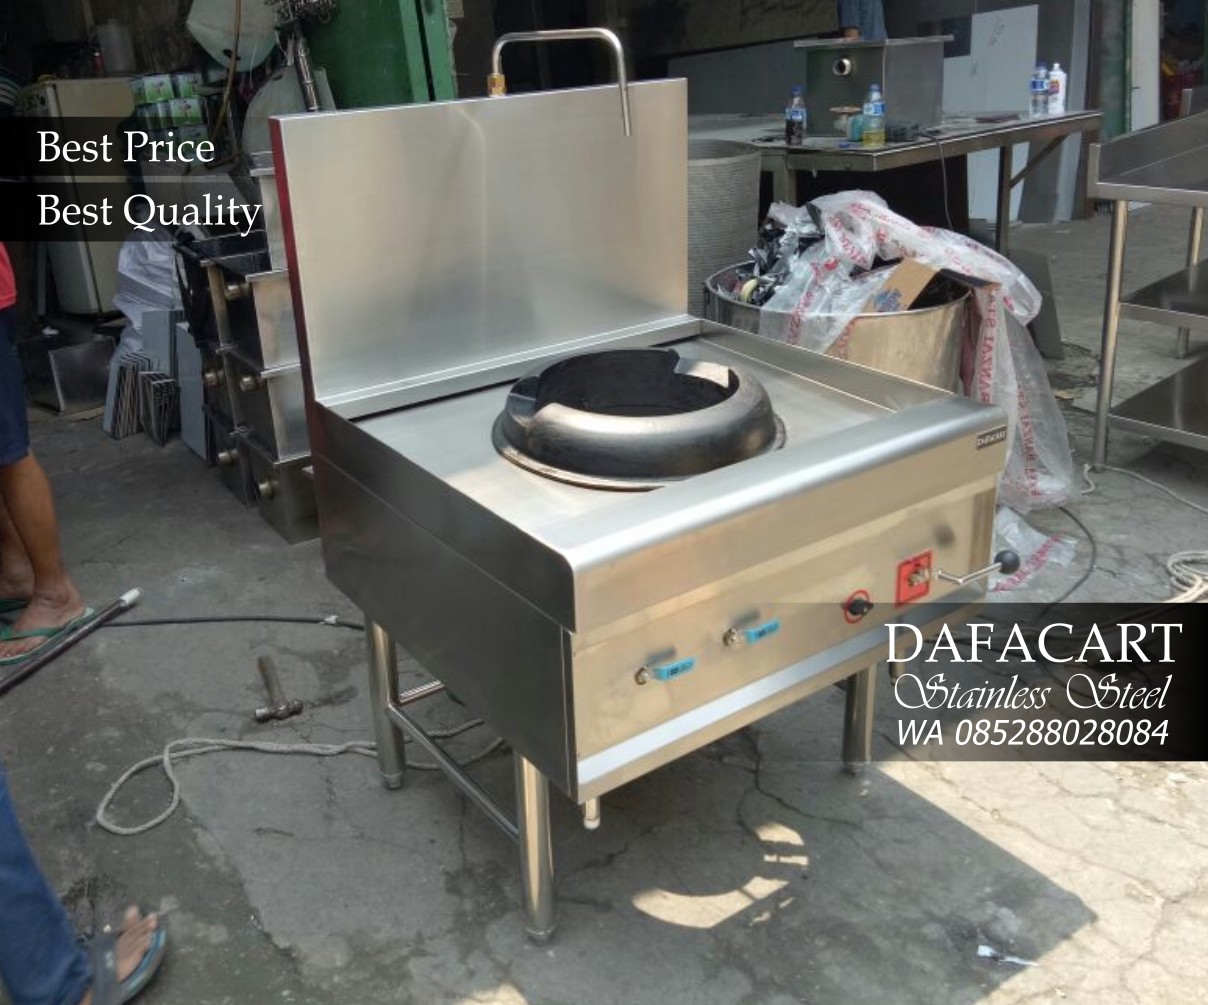 DAFACART Stainless Steel Gas Kwali Range 1 Burner 